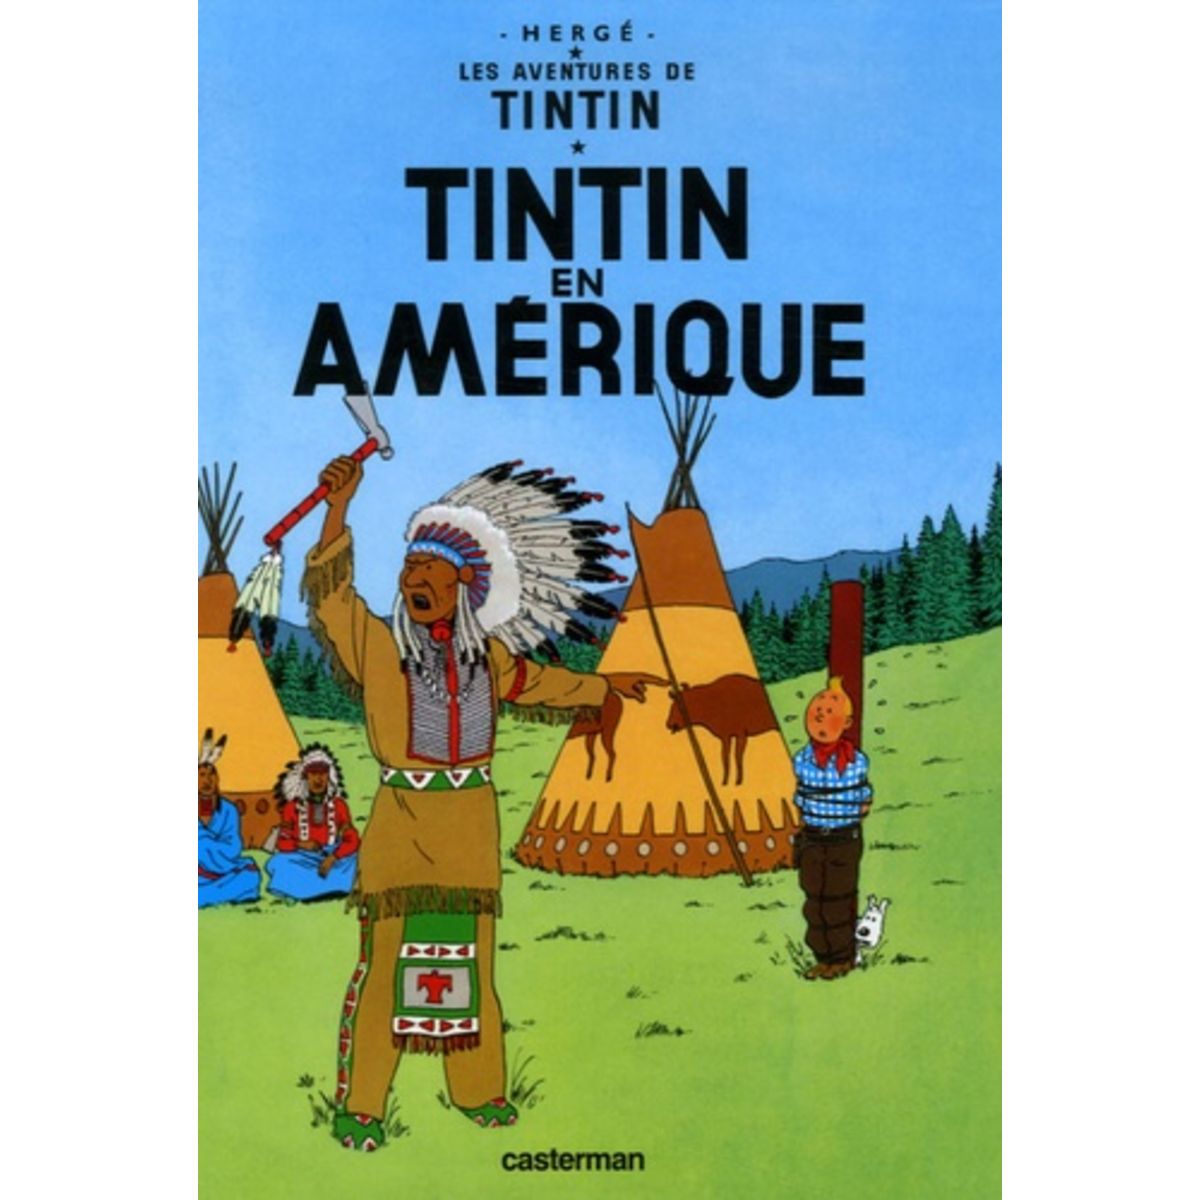  LES AVENTURES DE TINTIN TOME 3 : TINTIN EN AMERIQUE. MINI-ALBUM, Hergé